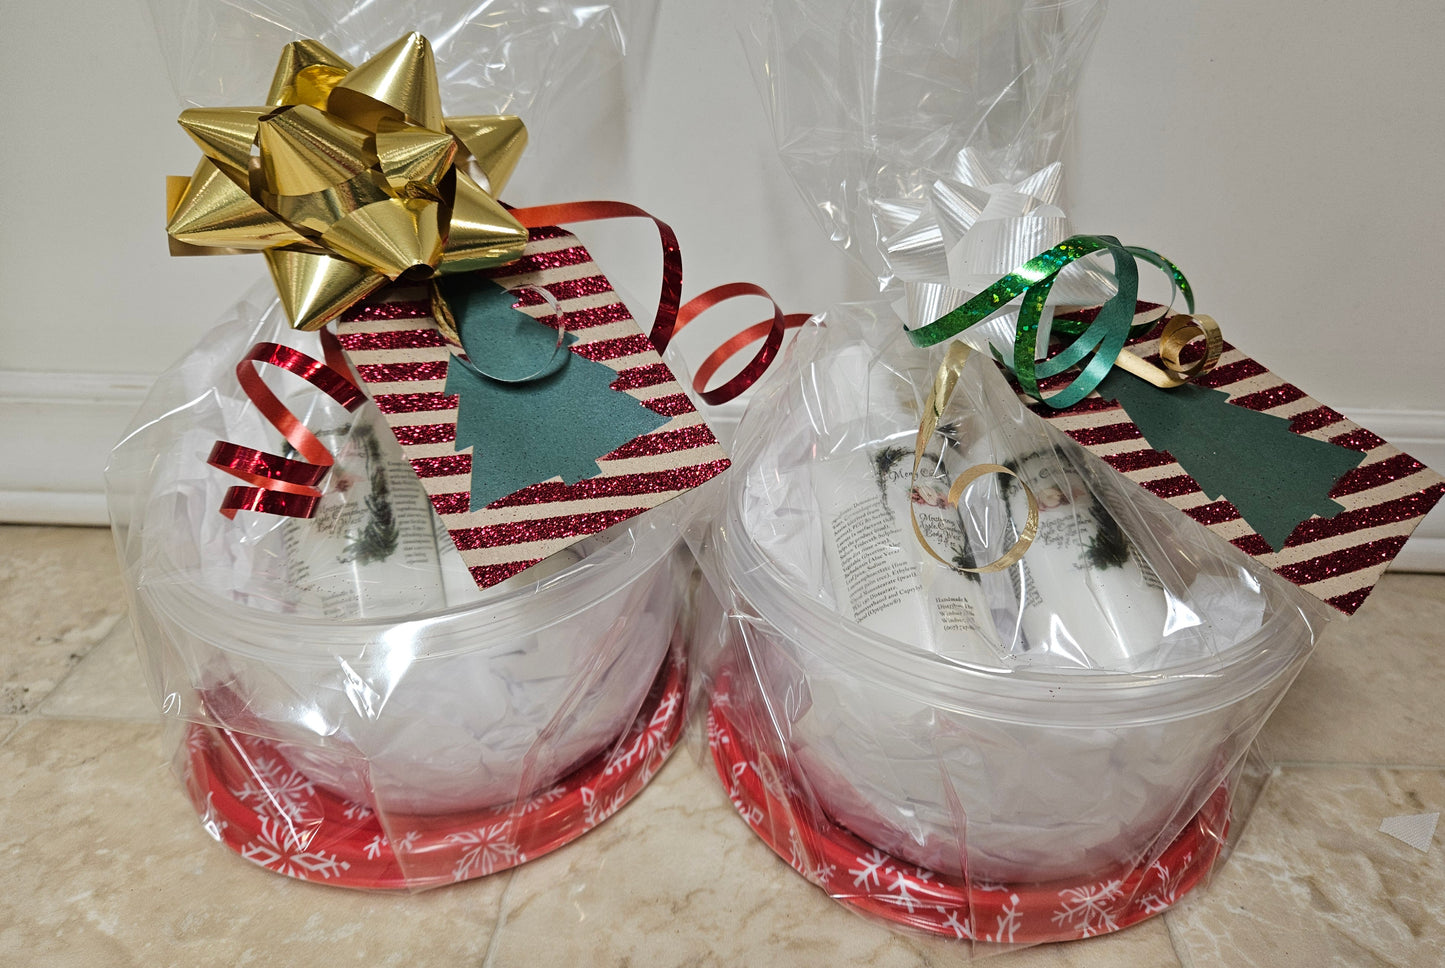 Custom Gift Baskets